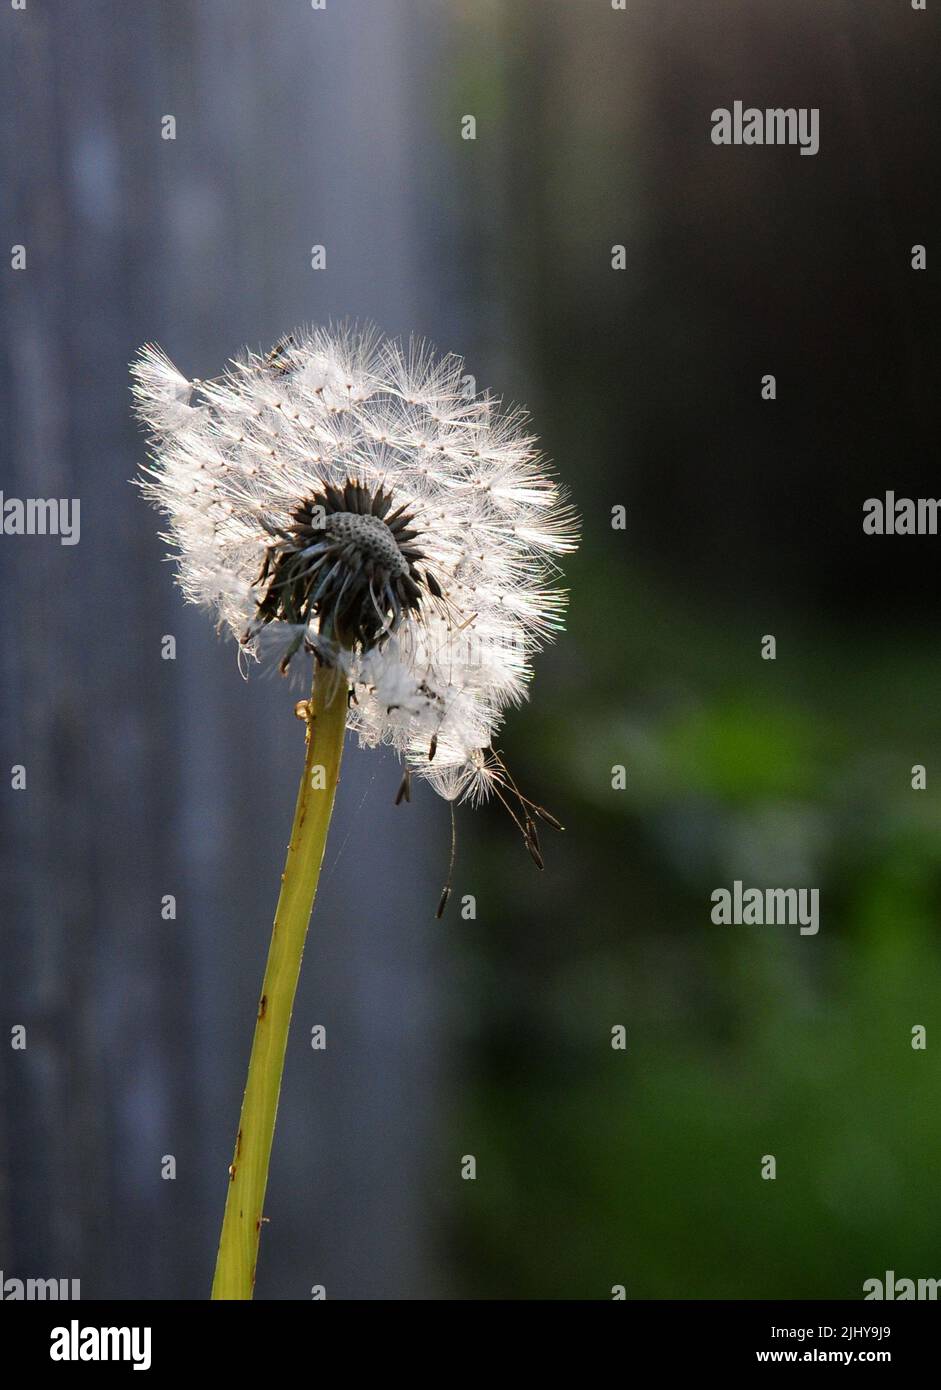 Dandelion seed head. Stock Photo